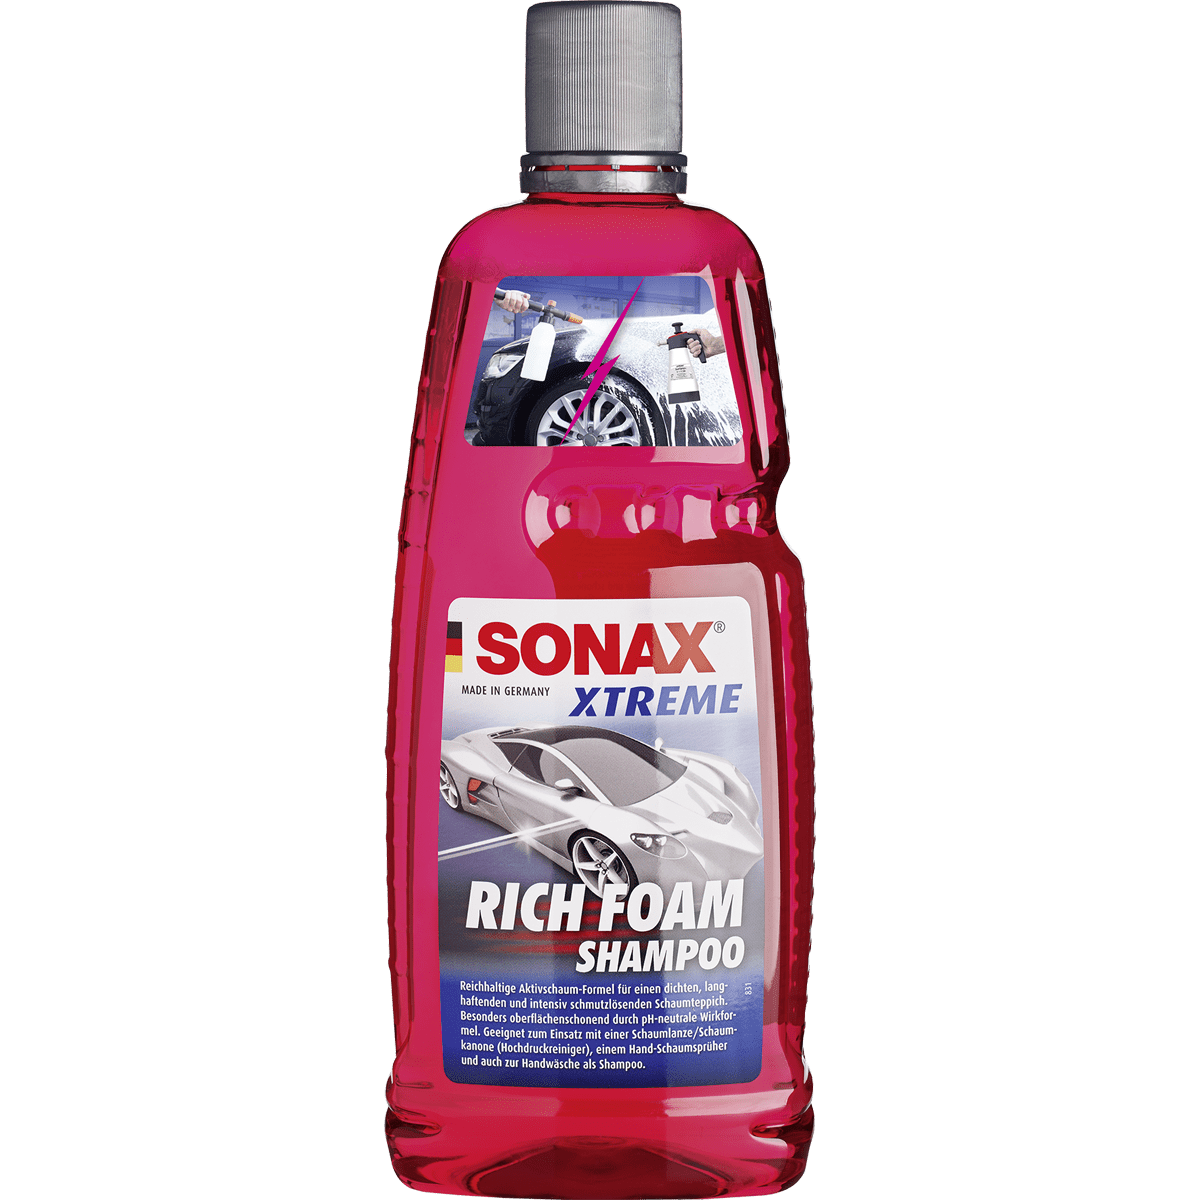 Sonax Xtreme Richfoam Shampoo 1 Liter